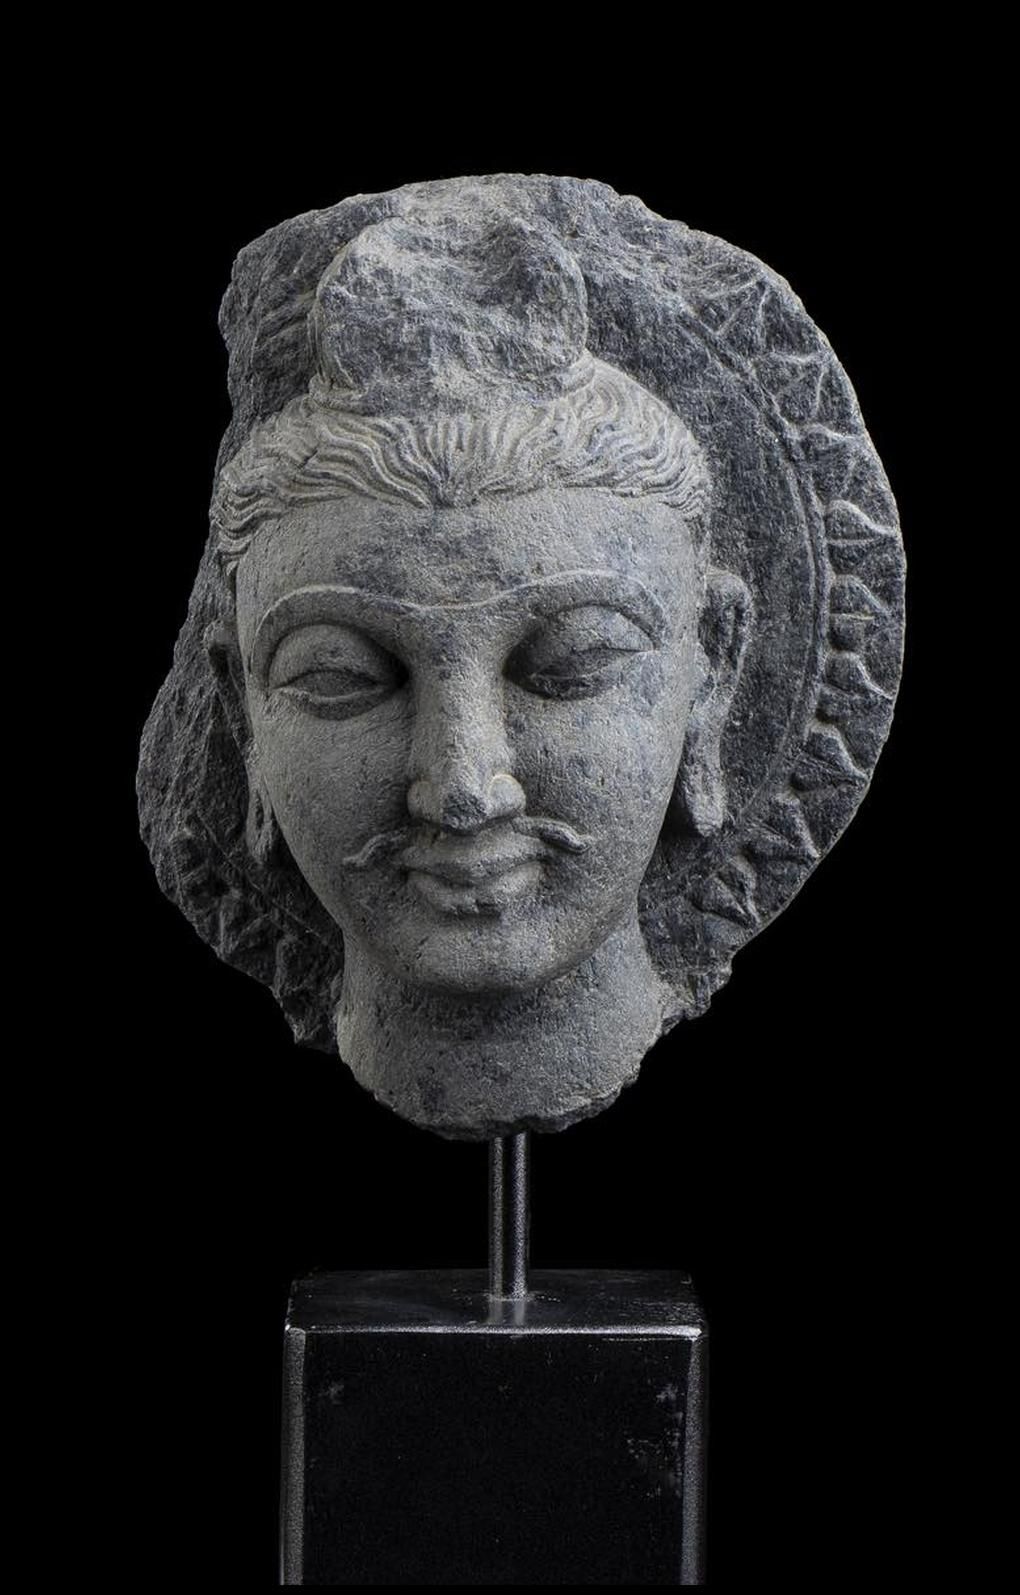 A STONE BUDDHA HEAD A STONE BUDDHA HEAD 
Gandhara style

18 x 14 cm

Provenance:&hellip;